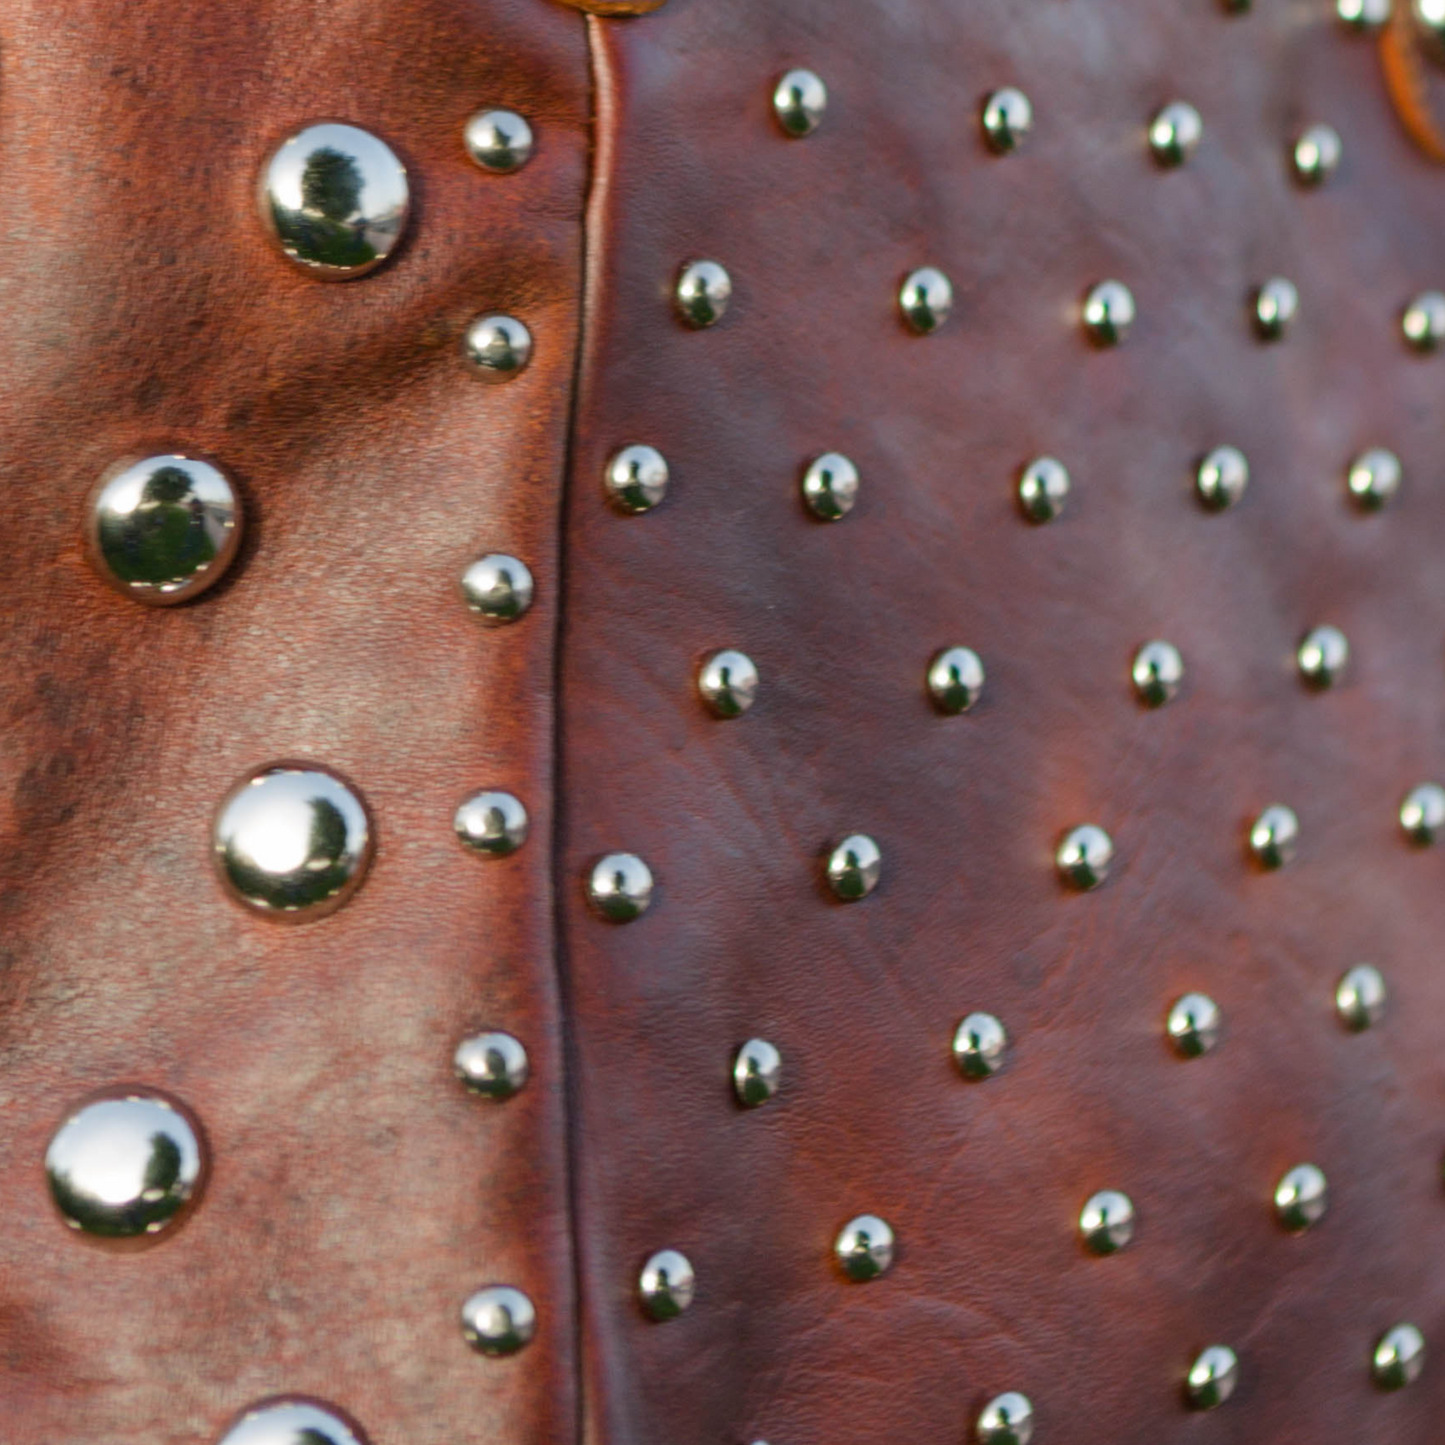 leather handbag with studs